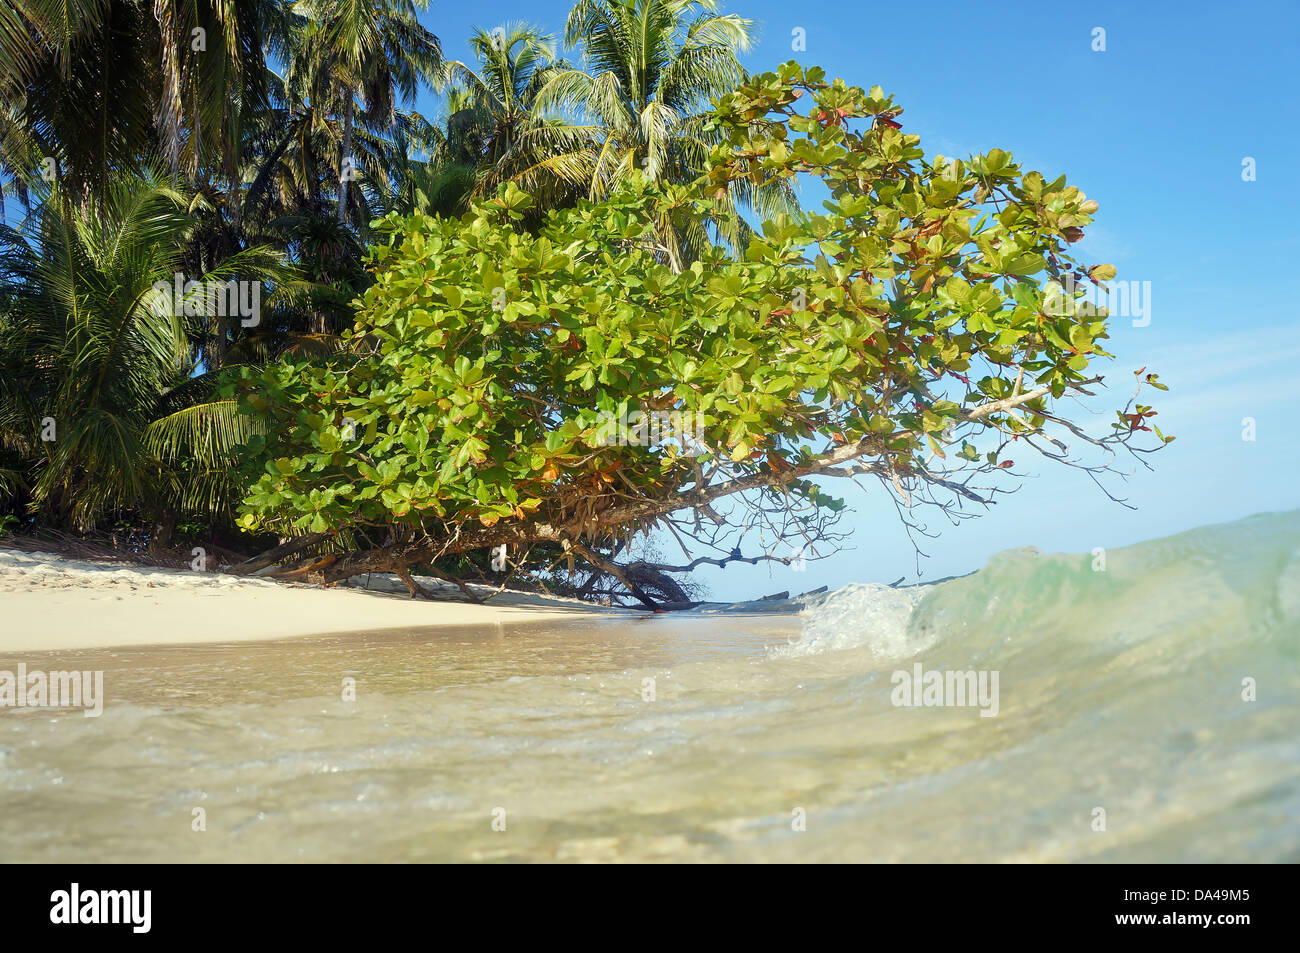 Wave on sandy beach with tropical vegetation, Caribbean, Puerto Viejo, Costa Rica Stock Photo